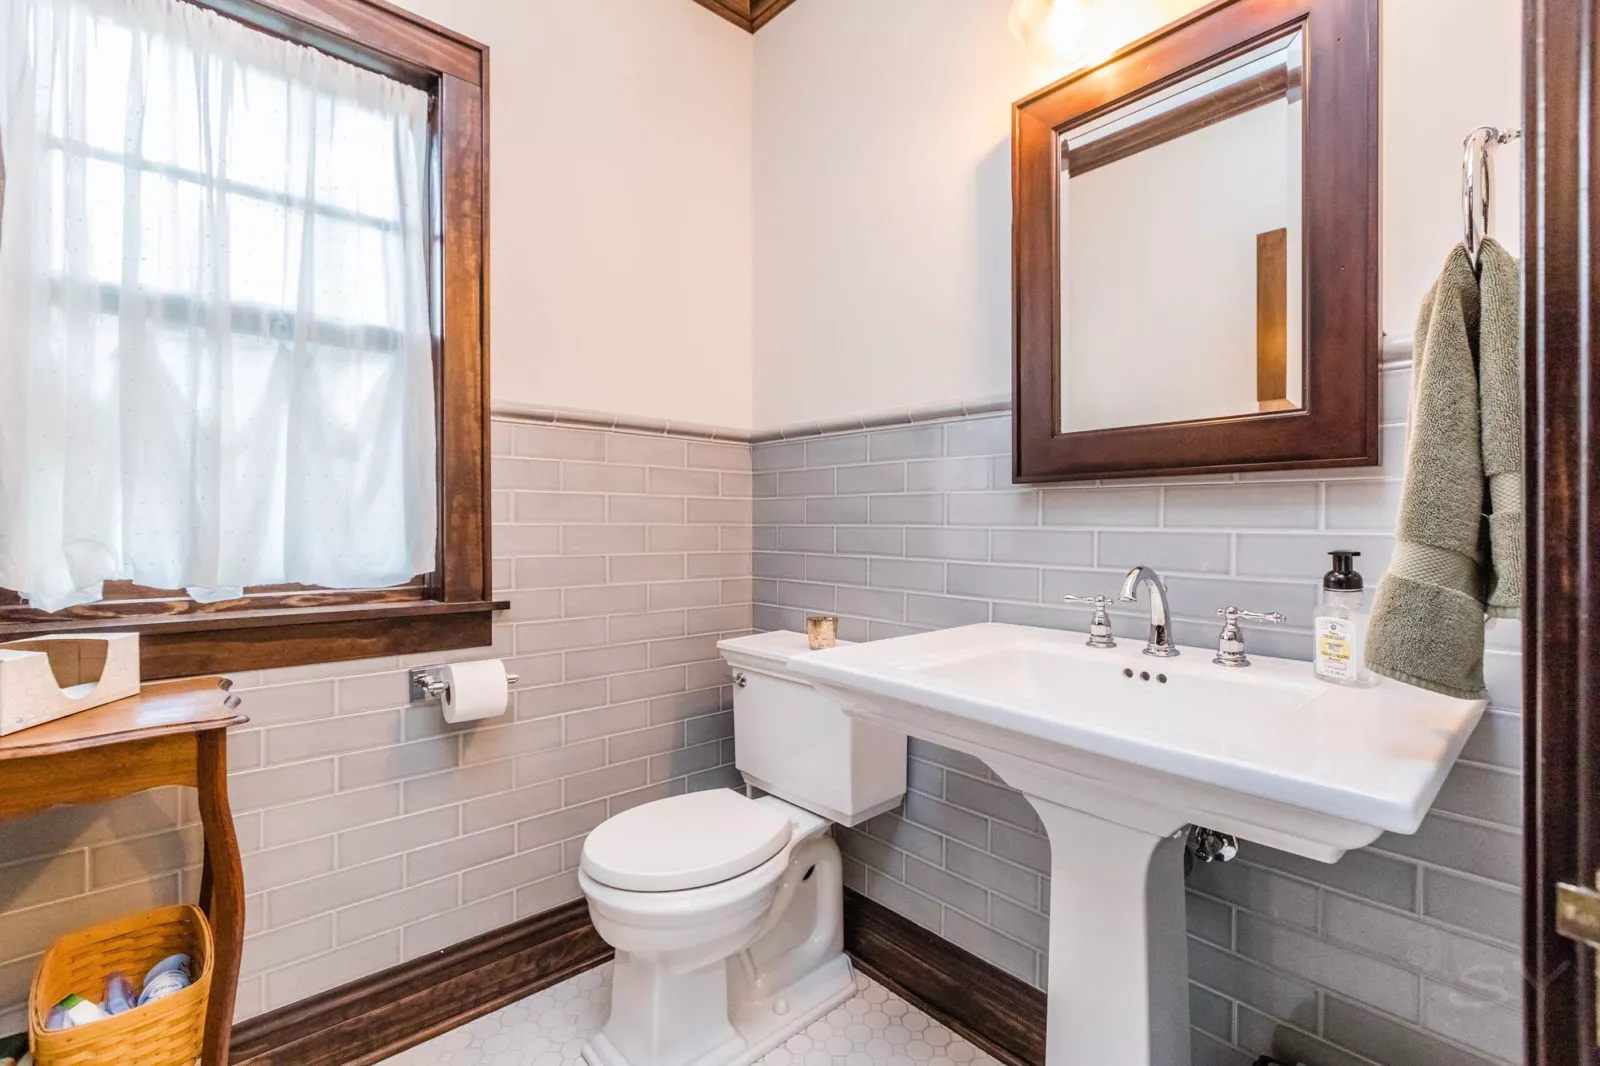 Bathroom with white toilet & sink, bathroom mirror, window, and grey tiled walls